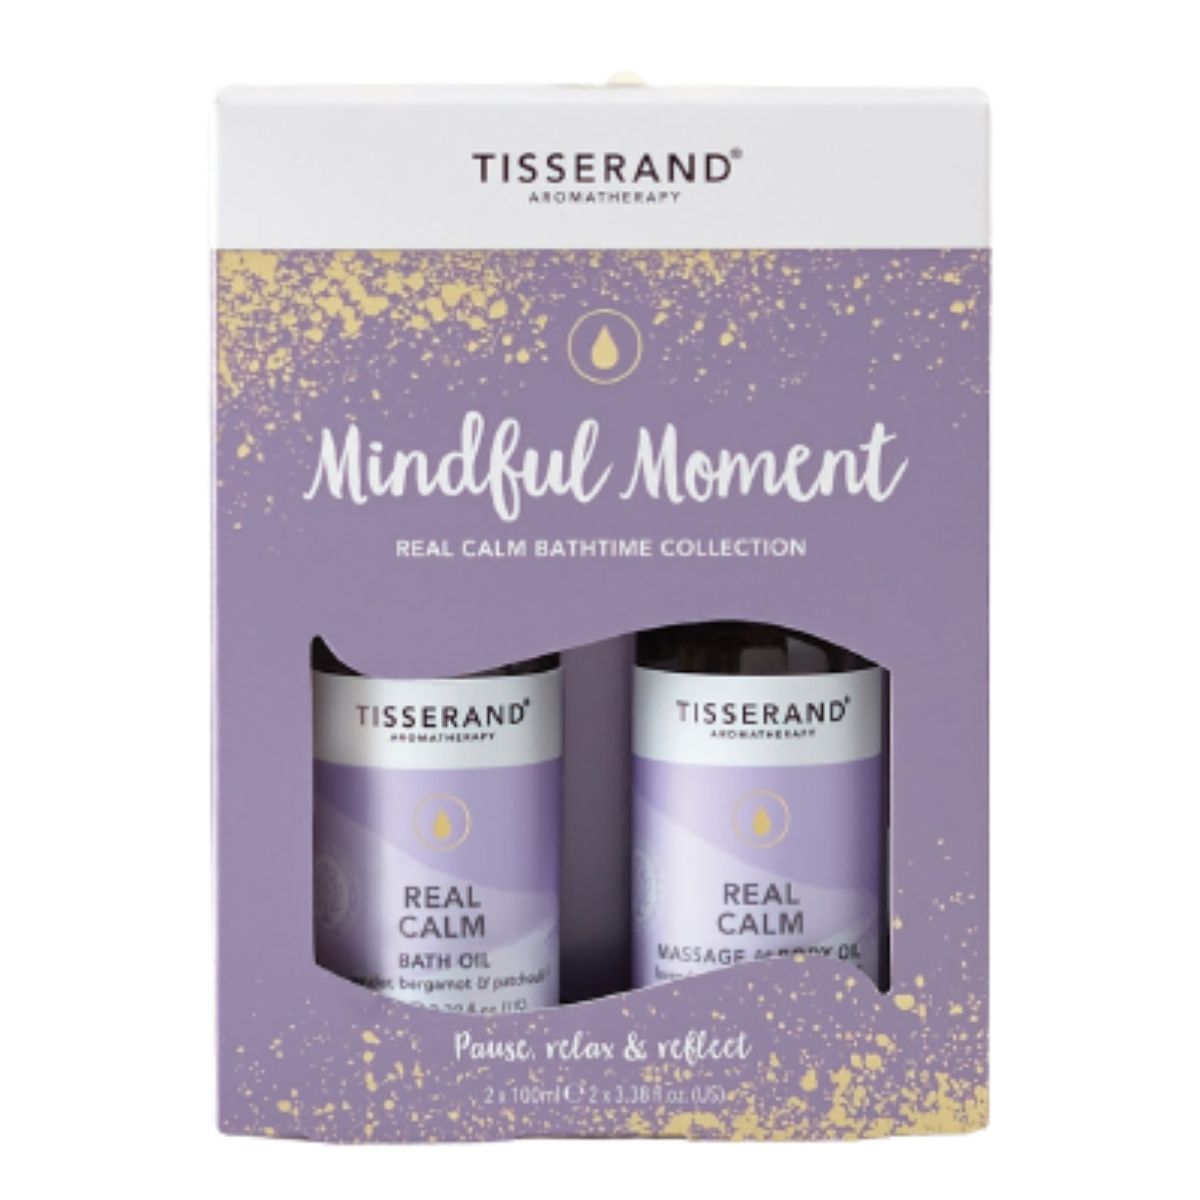 Tisserand Mindful Moment Bath Set.